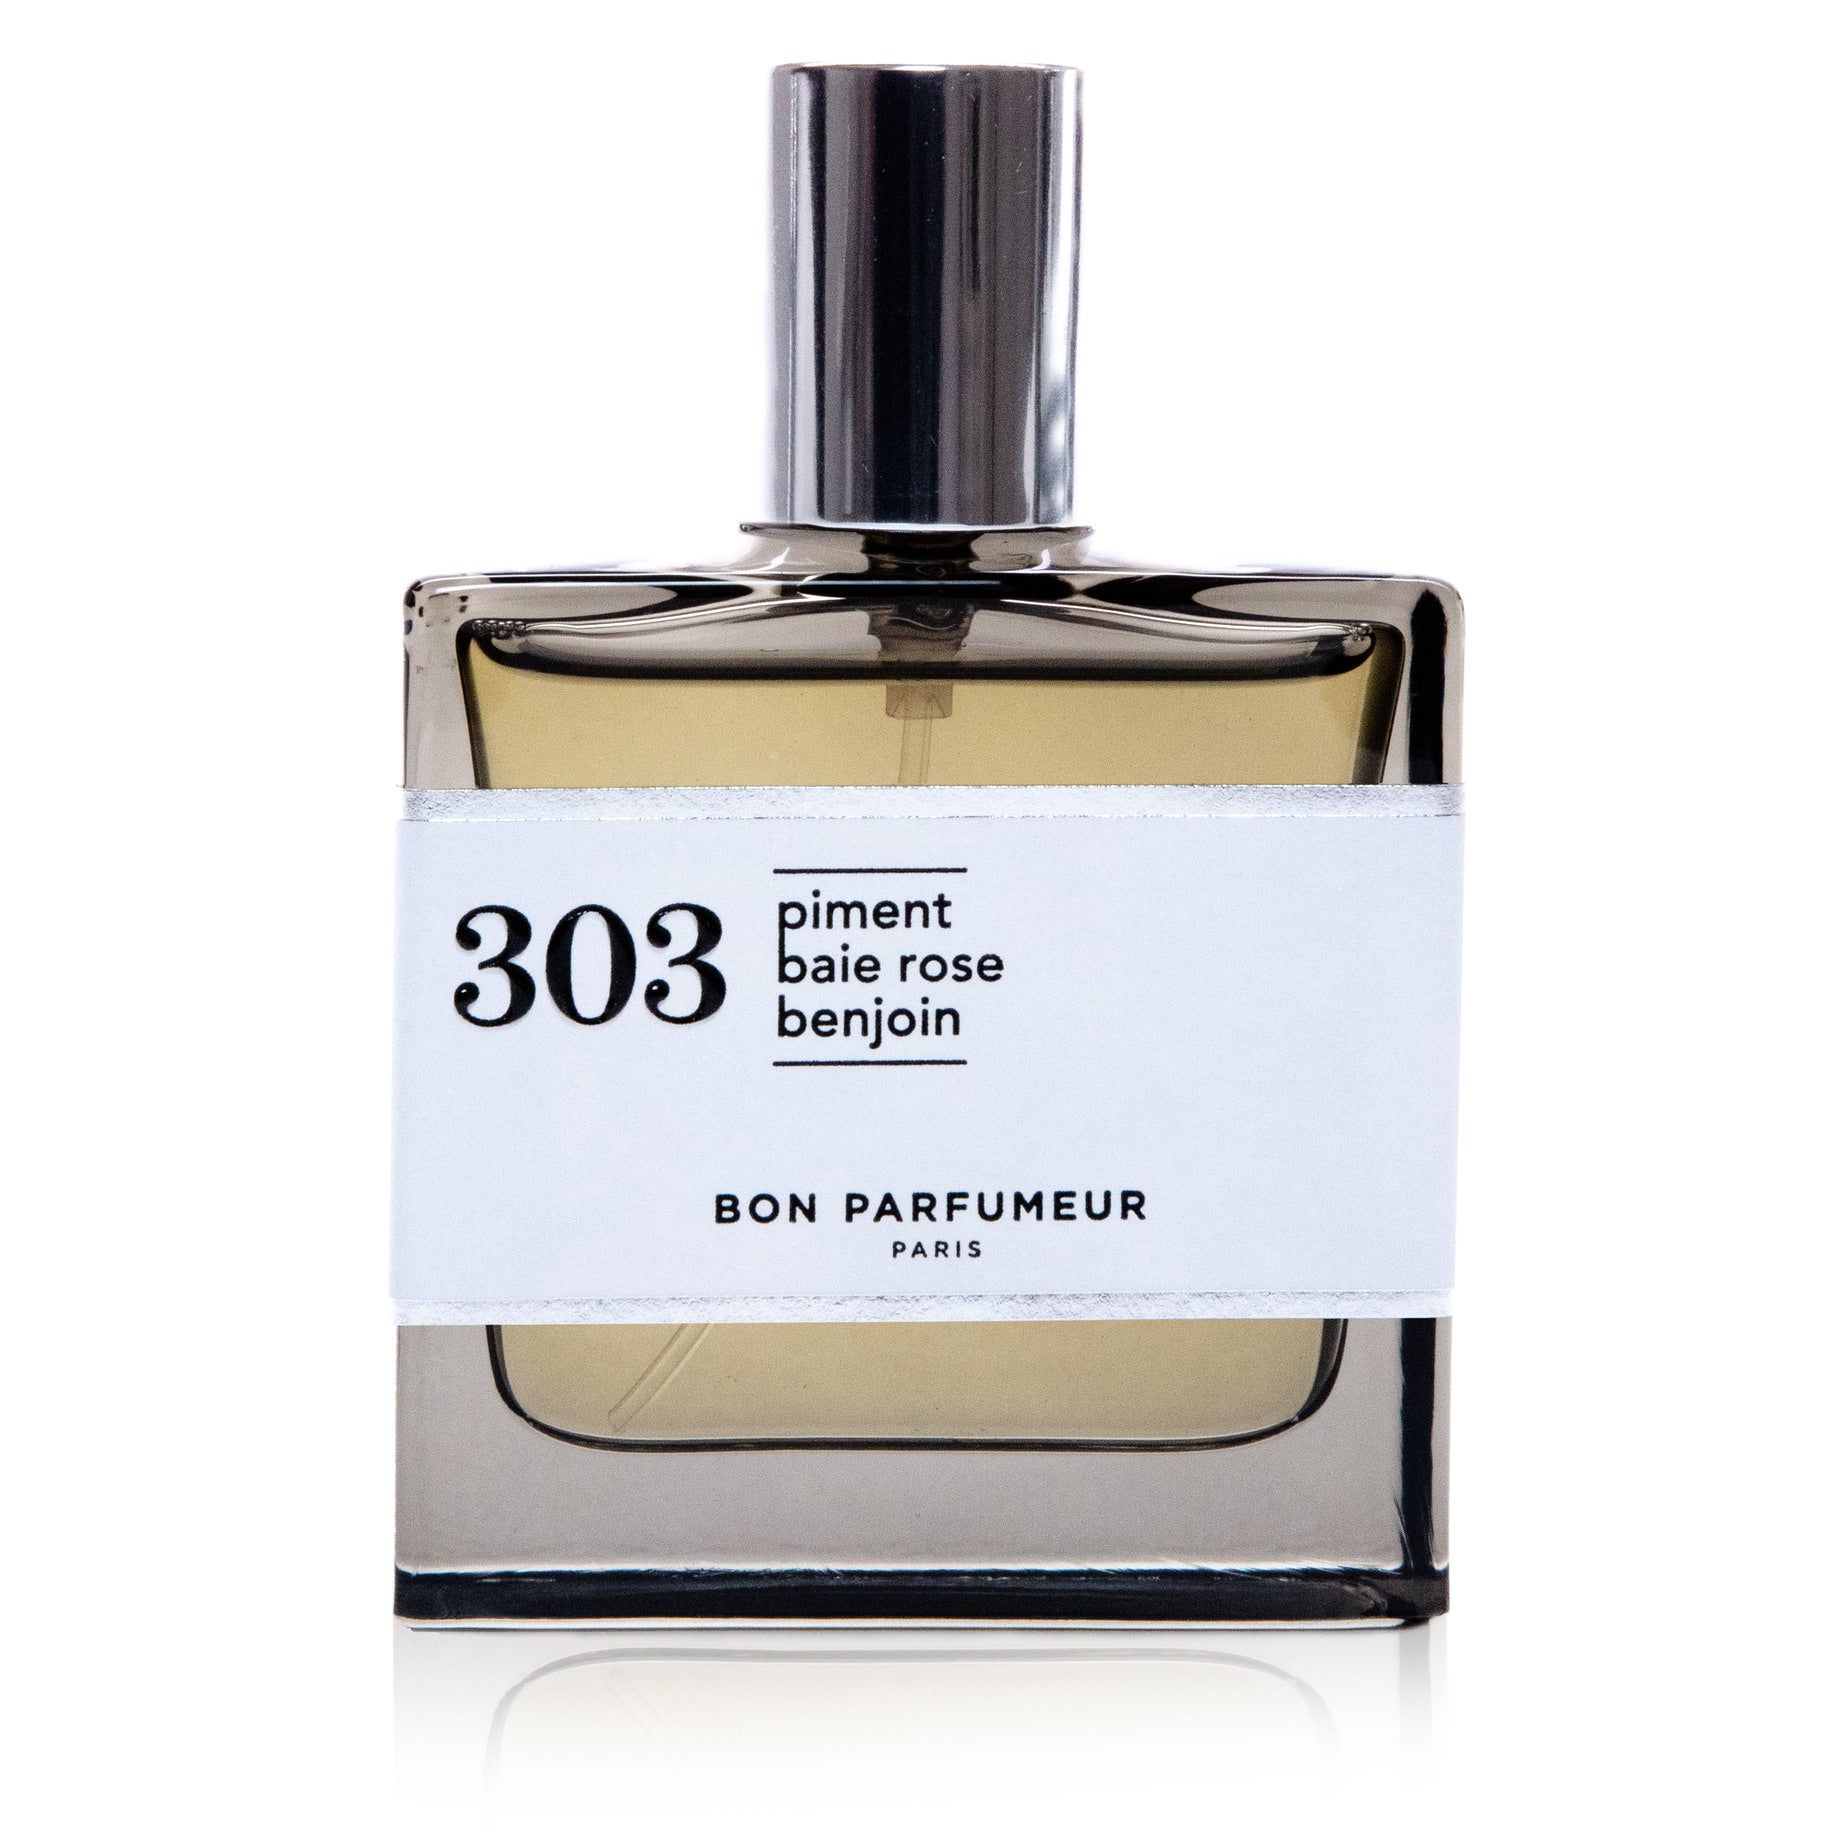 Bon Parfumeur - Les Privés 303 - Danae Profumeria